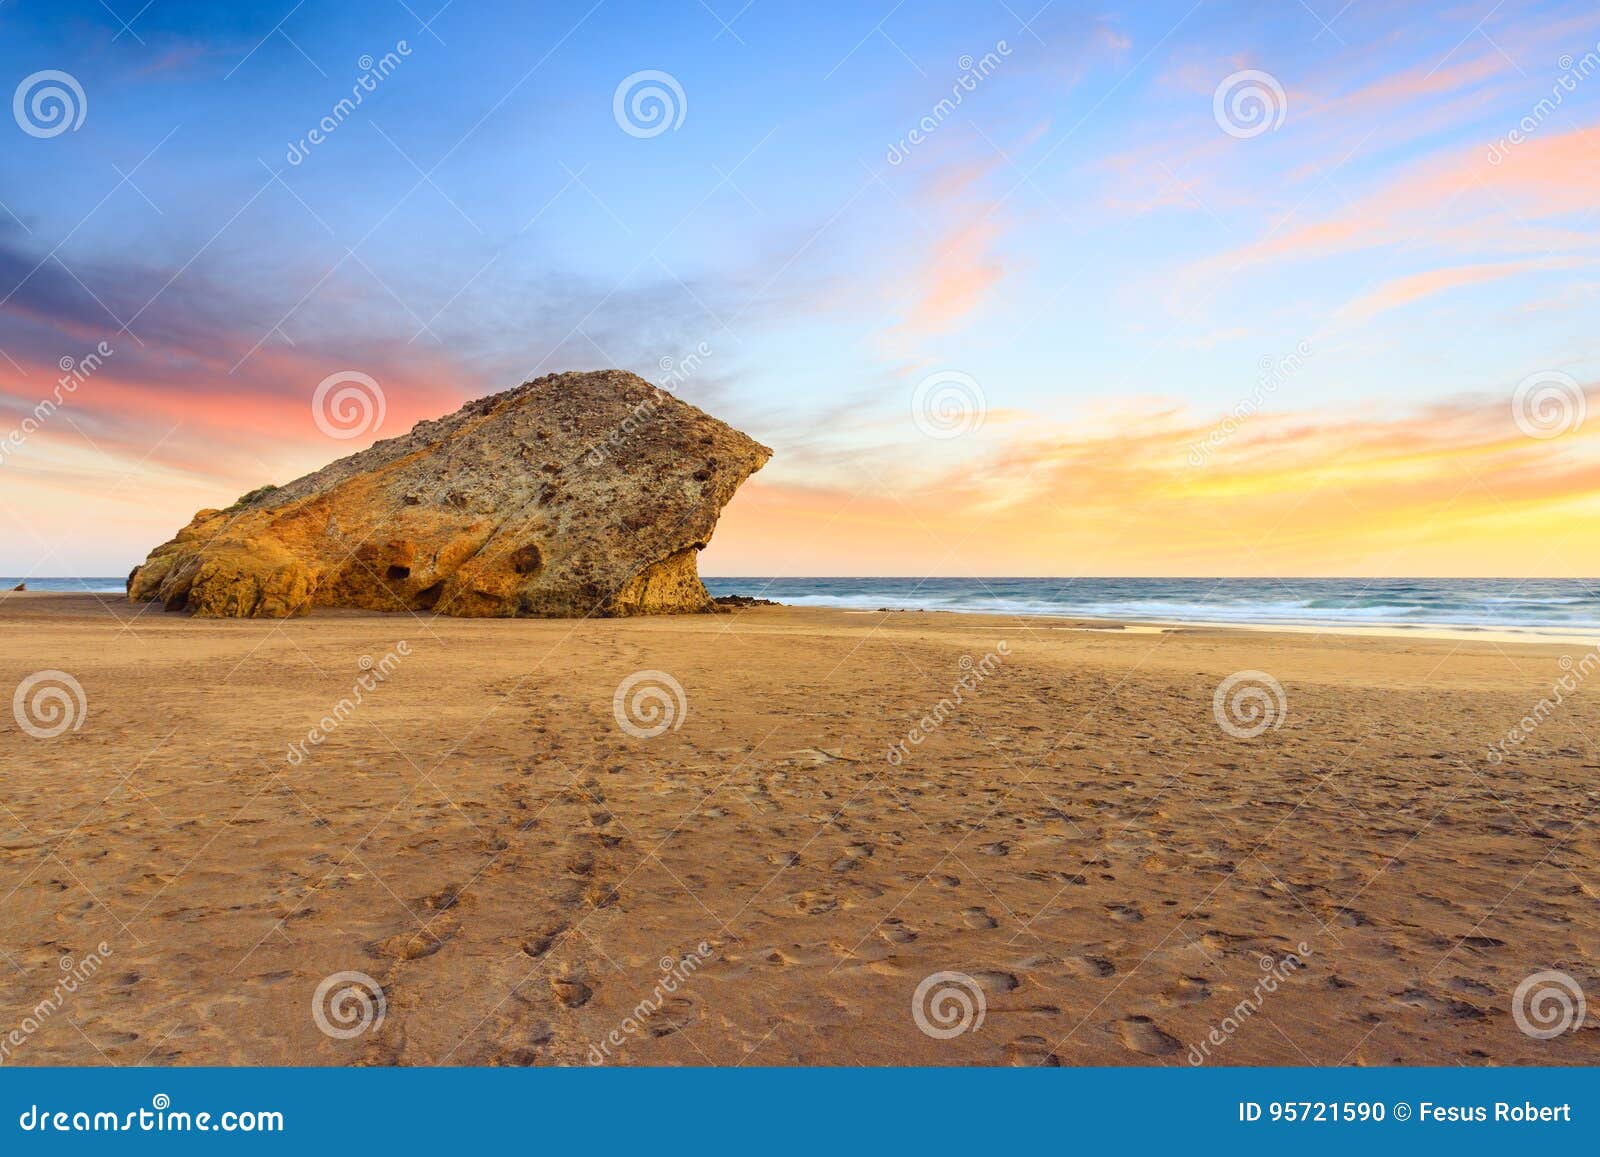 monsul beach near almeria